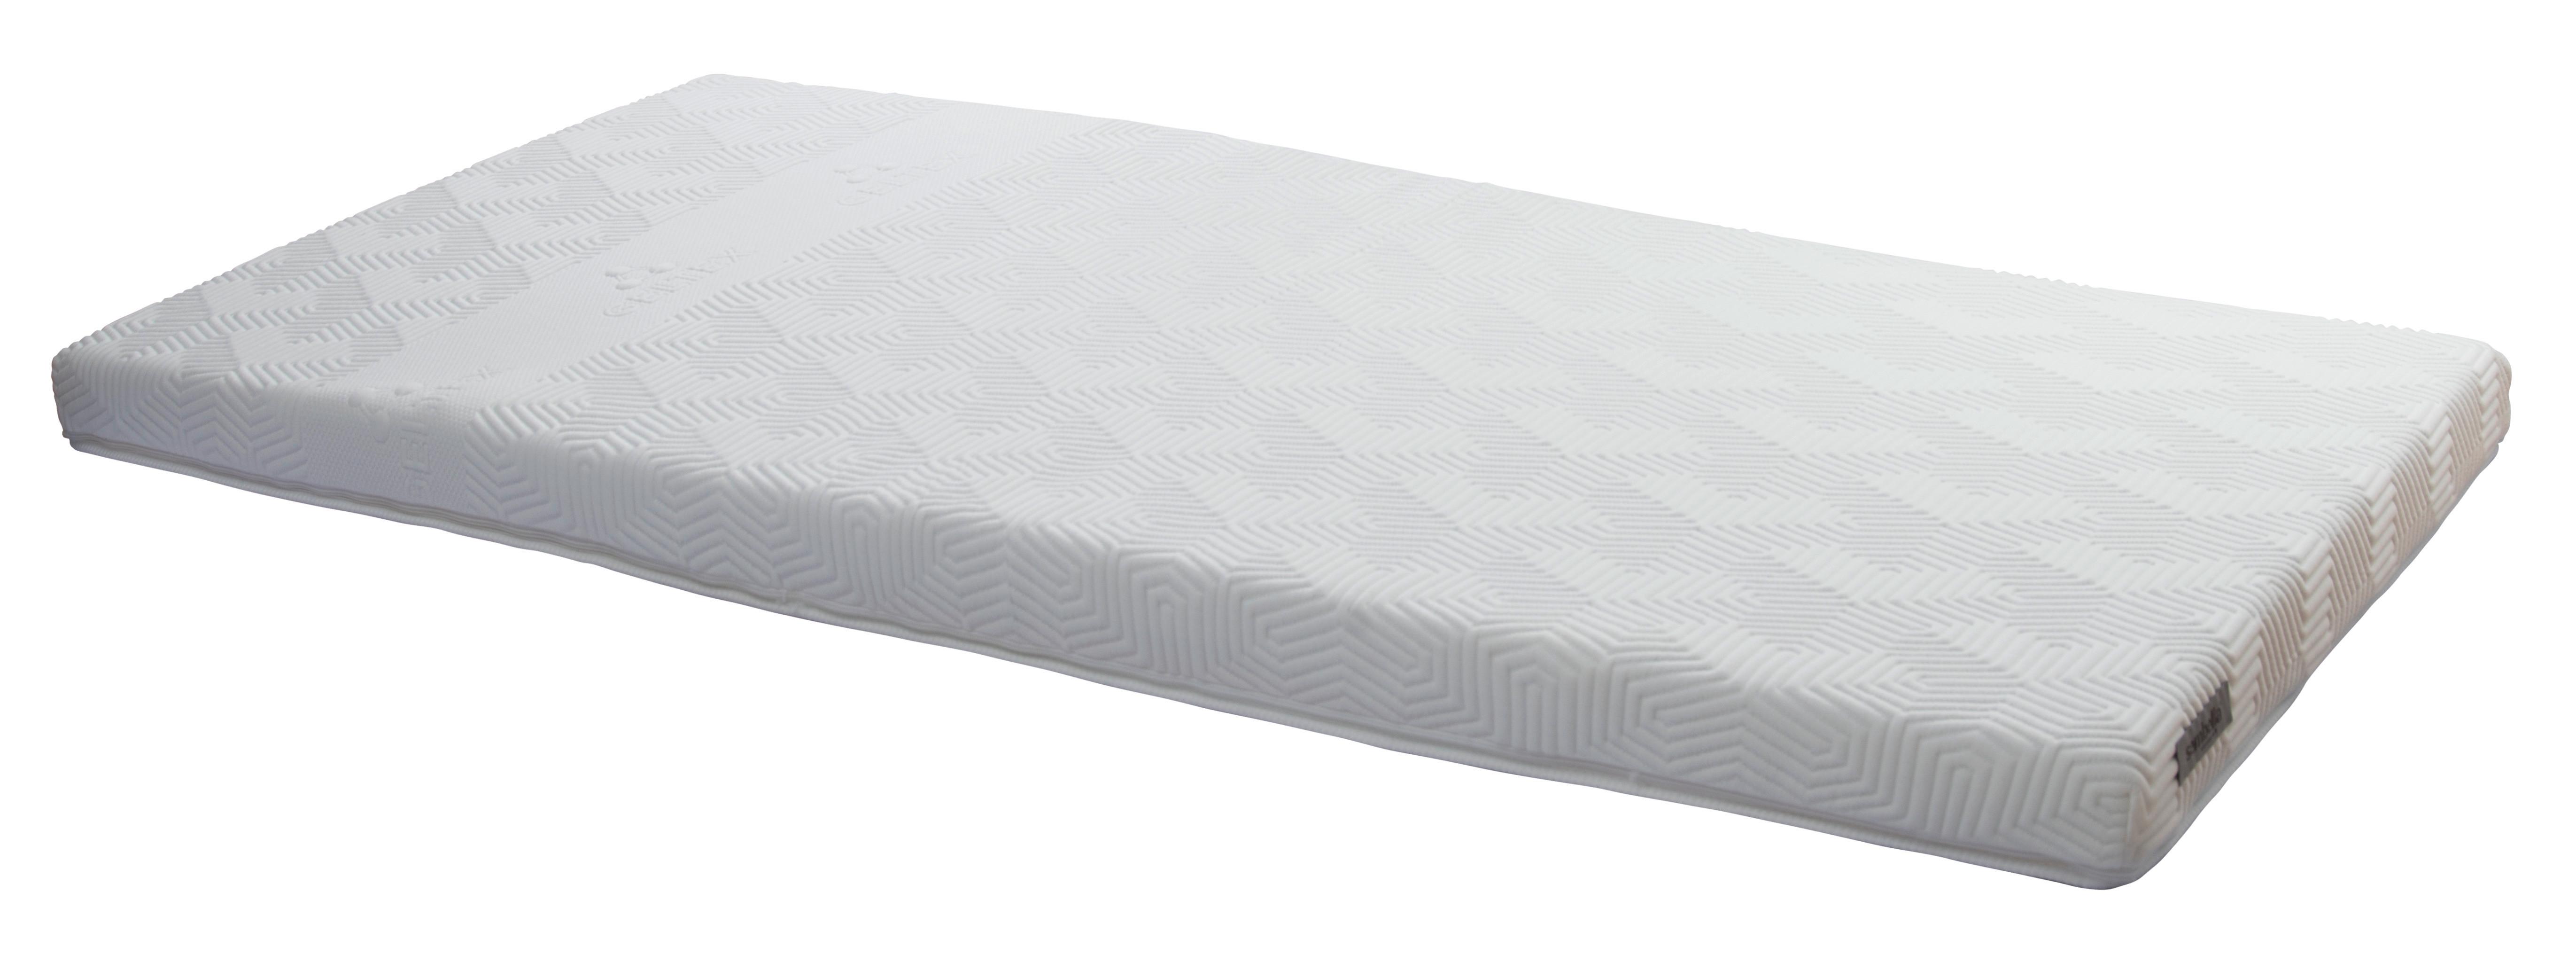 Topper Geltex 90x200 cm - Weiß, Textil (90/200cm) - Sembella